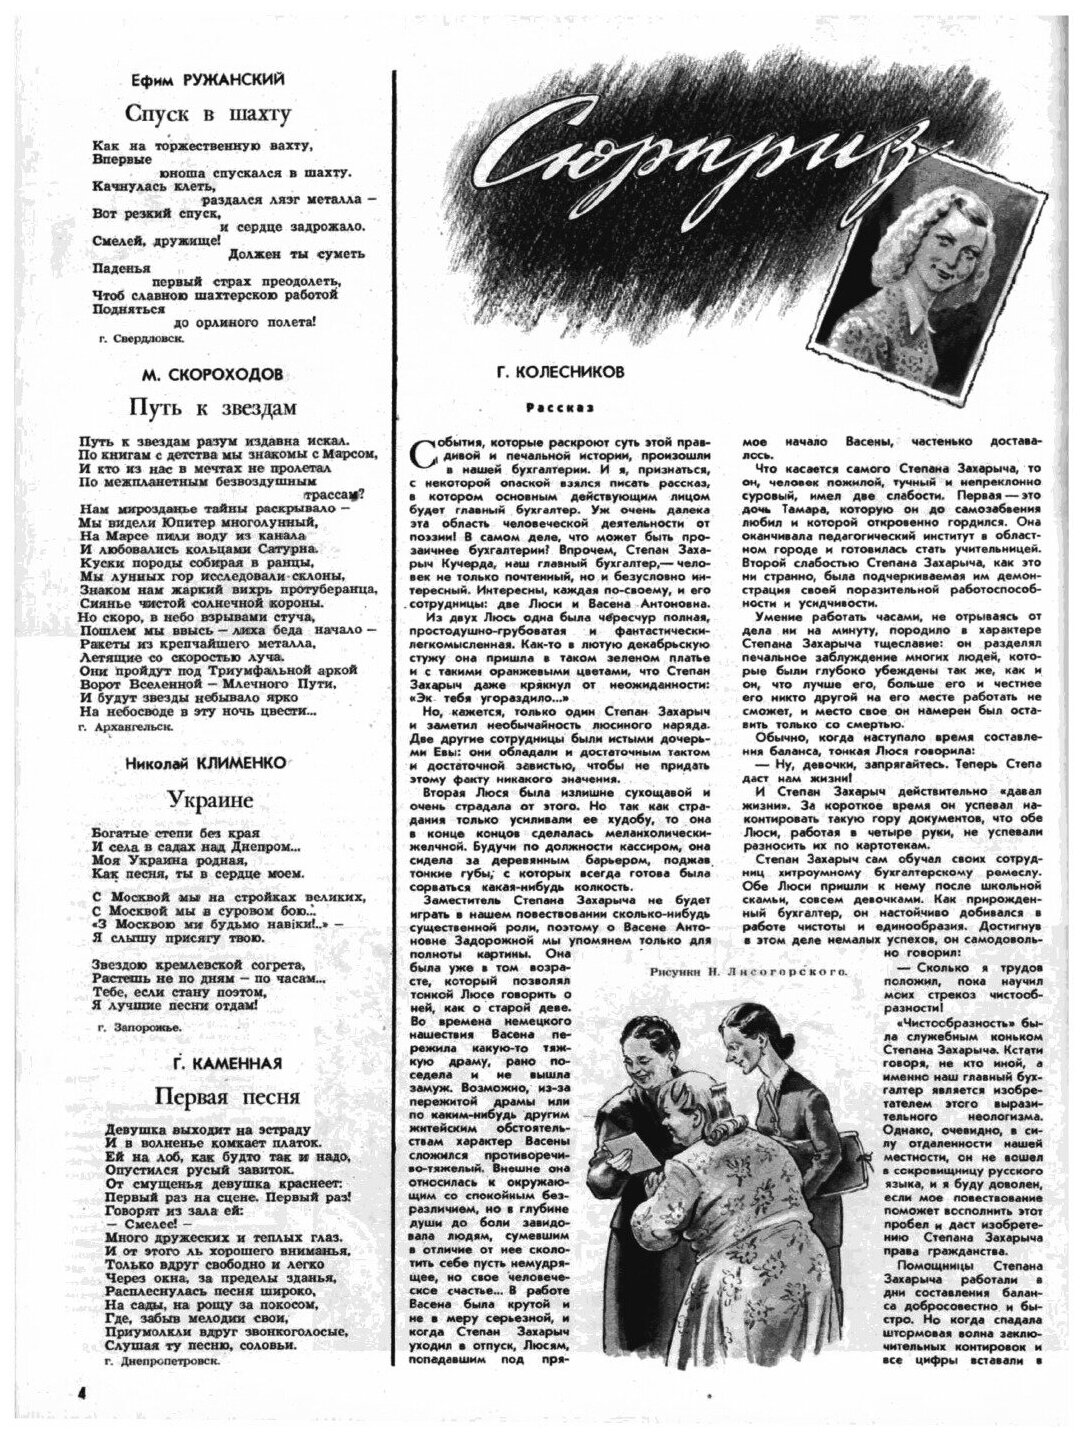 Журнал "Смена". № 06, 1956 - фото №4